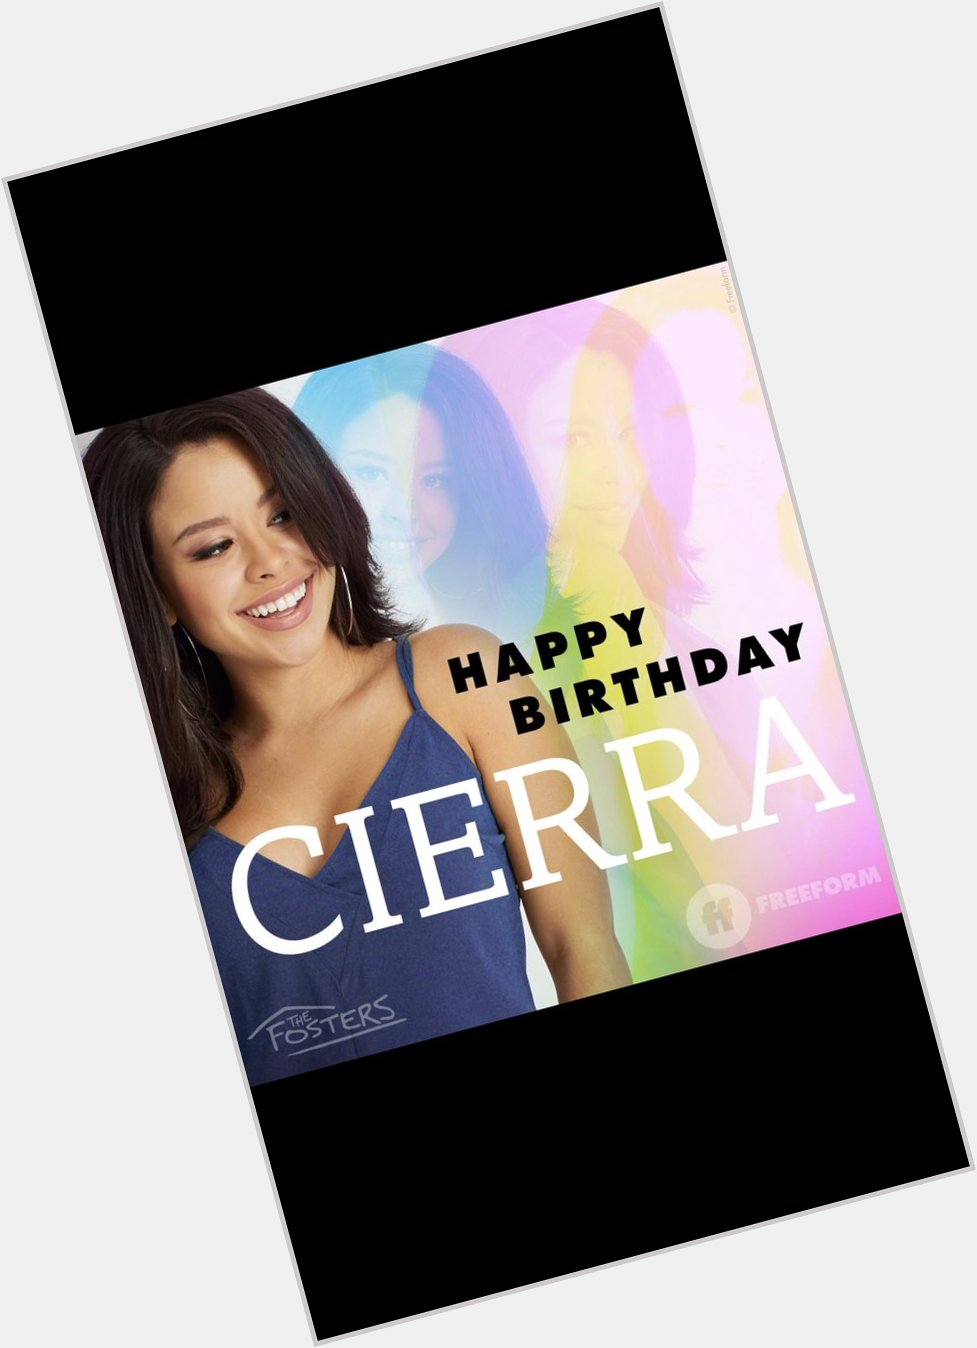 Wishing a happy birthday to the incredible Cierra Ramirez.  